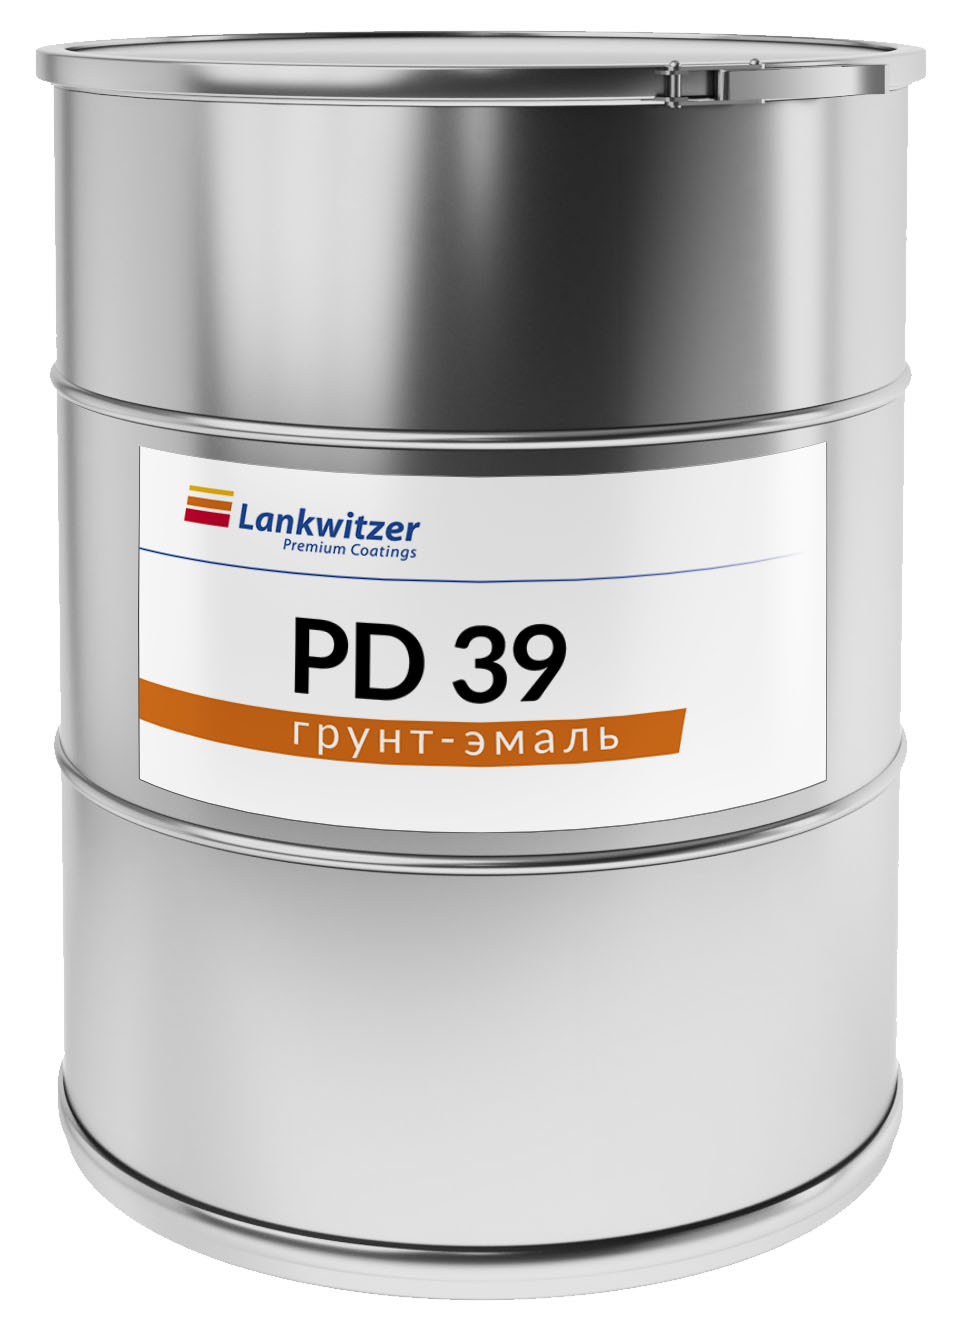 PD 39 грунт-эмаль